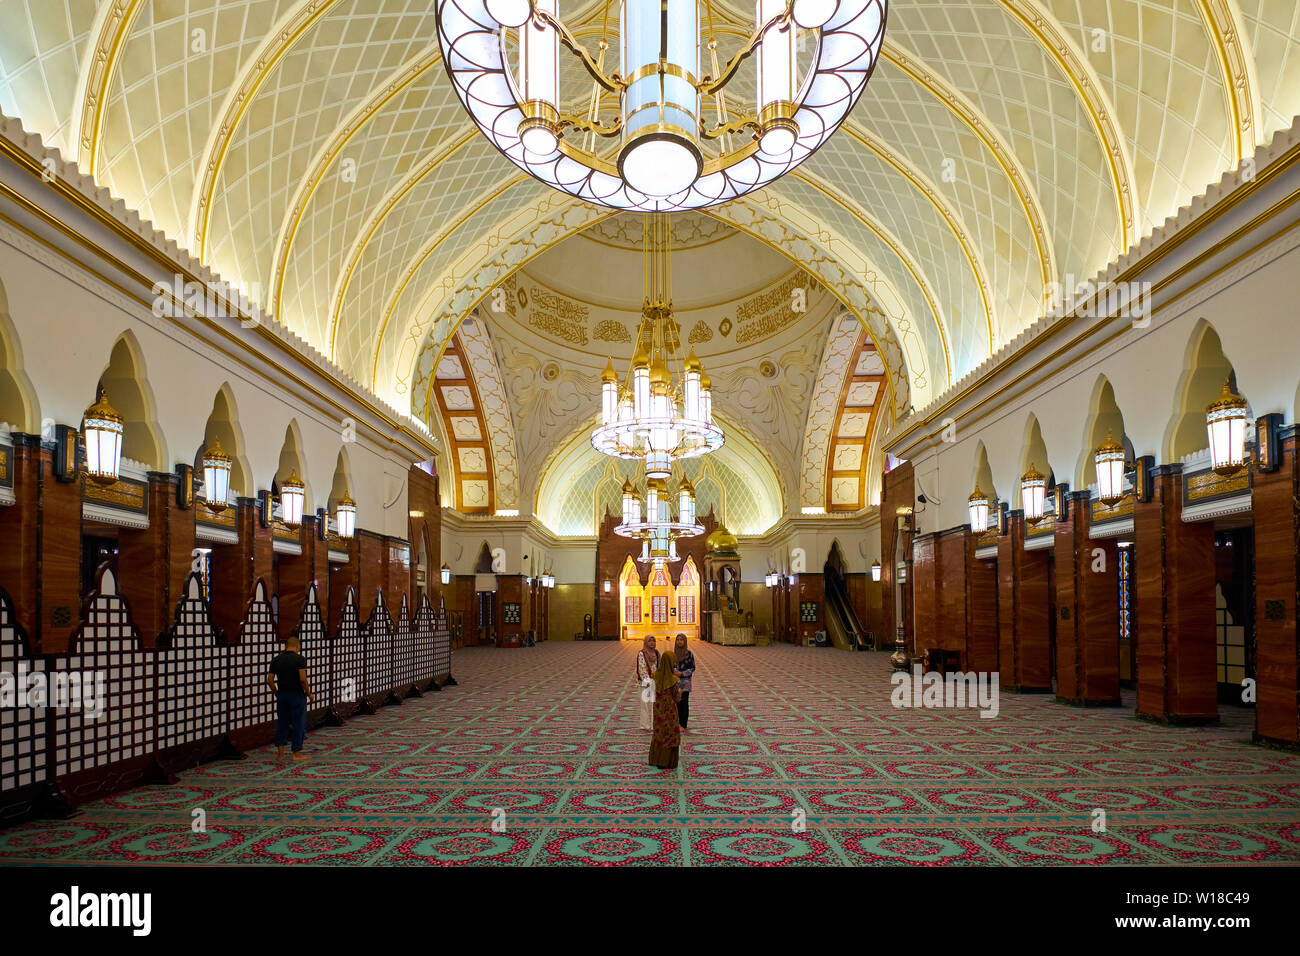 Interior view of the Omar Ali Saifuddien mosque in downtown Bandar Seri Begawan,Brunei. Stock Photo